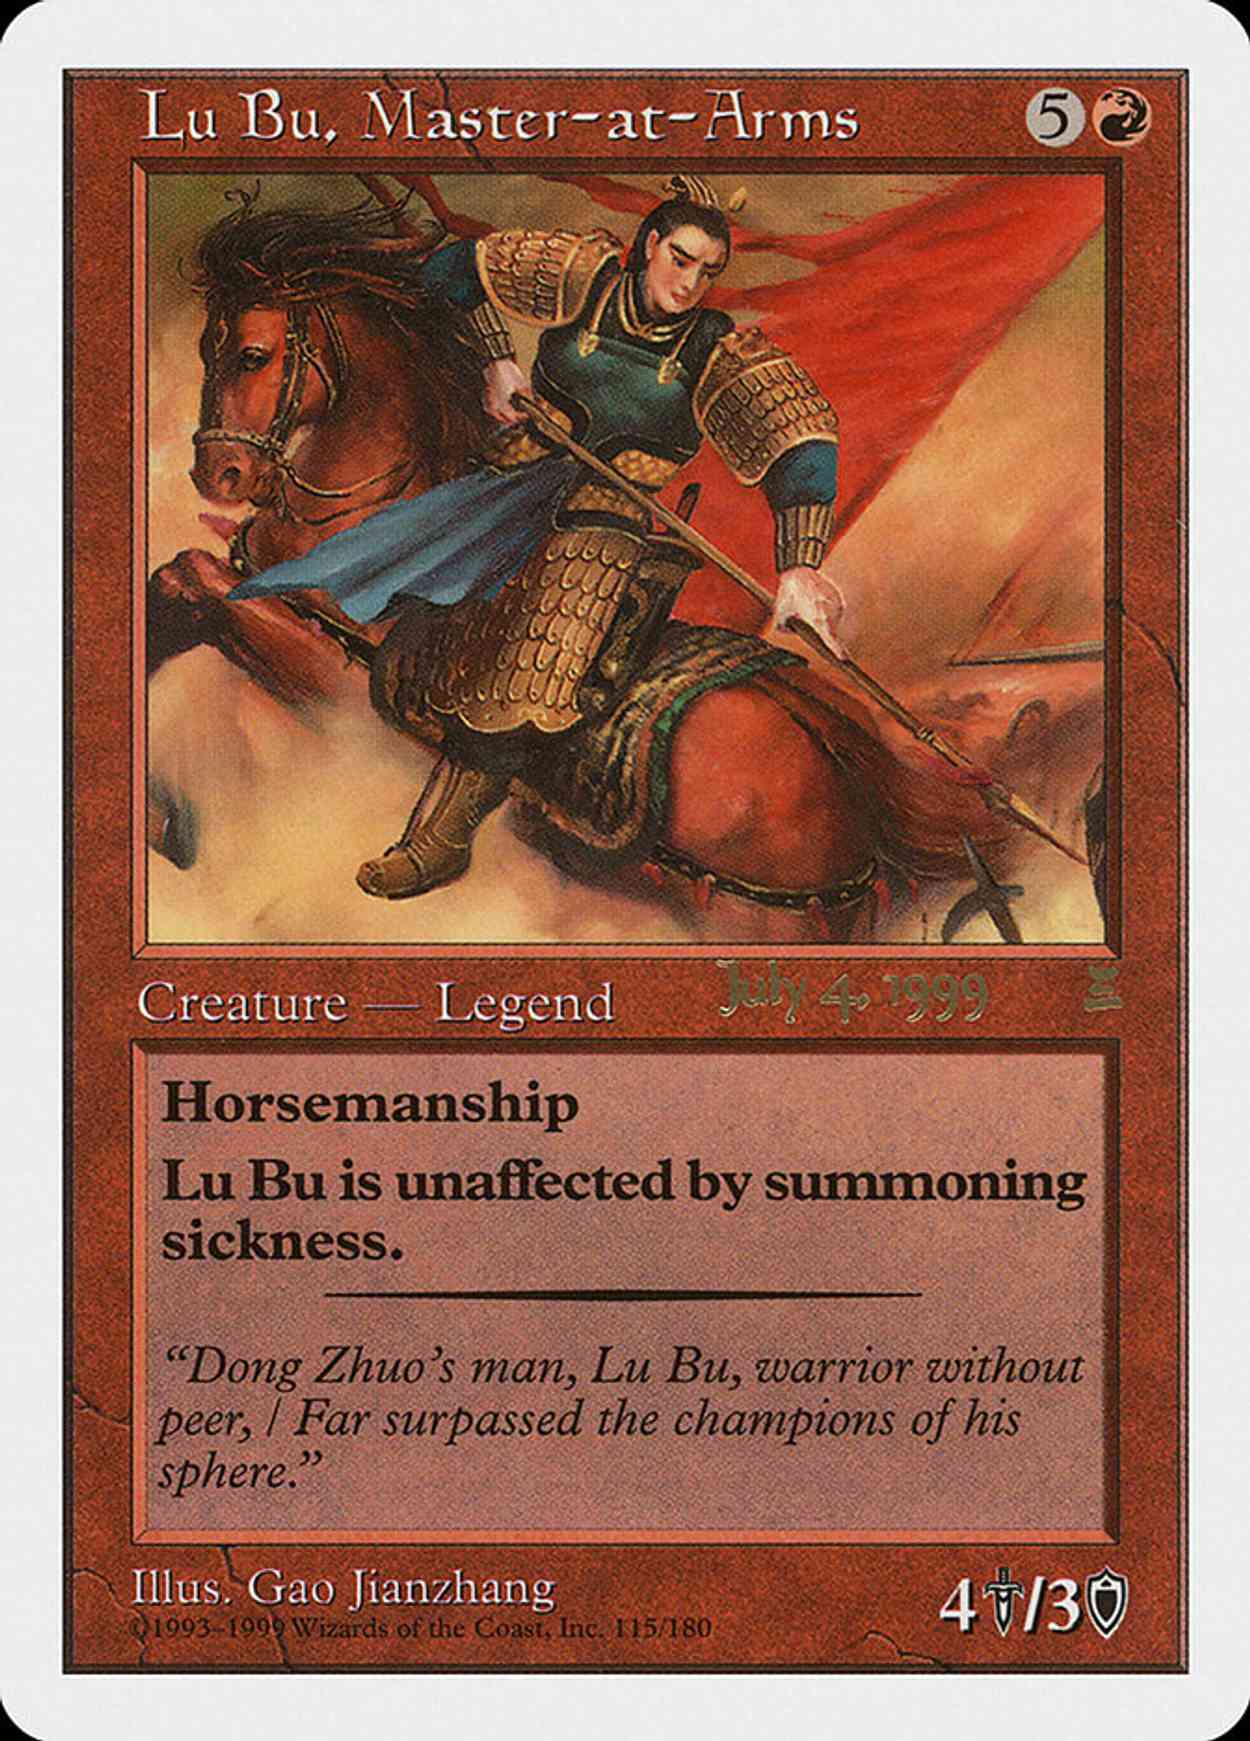 Lu Bu, Master-at-Arms (Singapore 7/4/99) magic card front